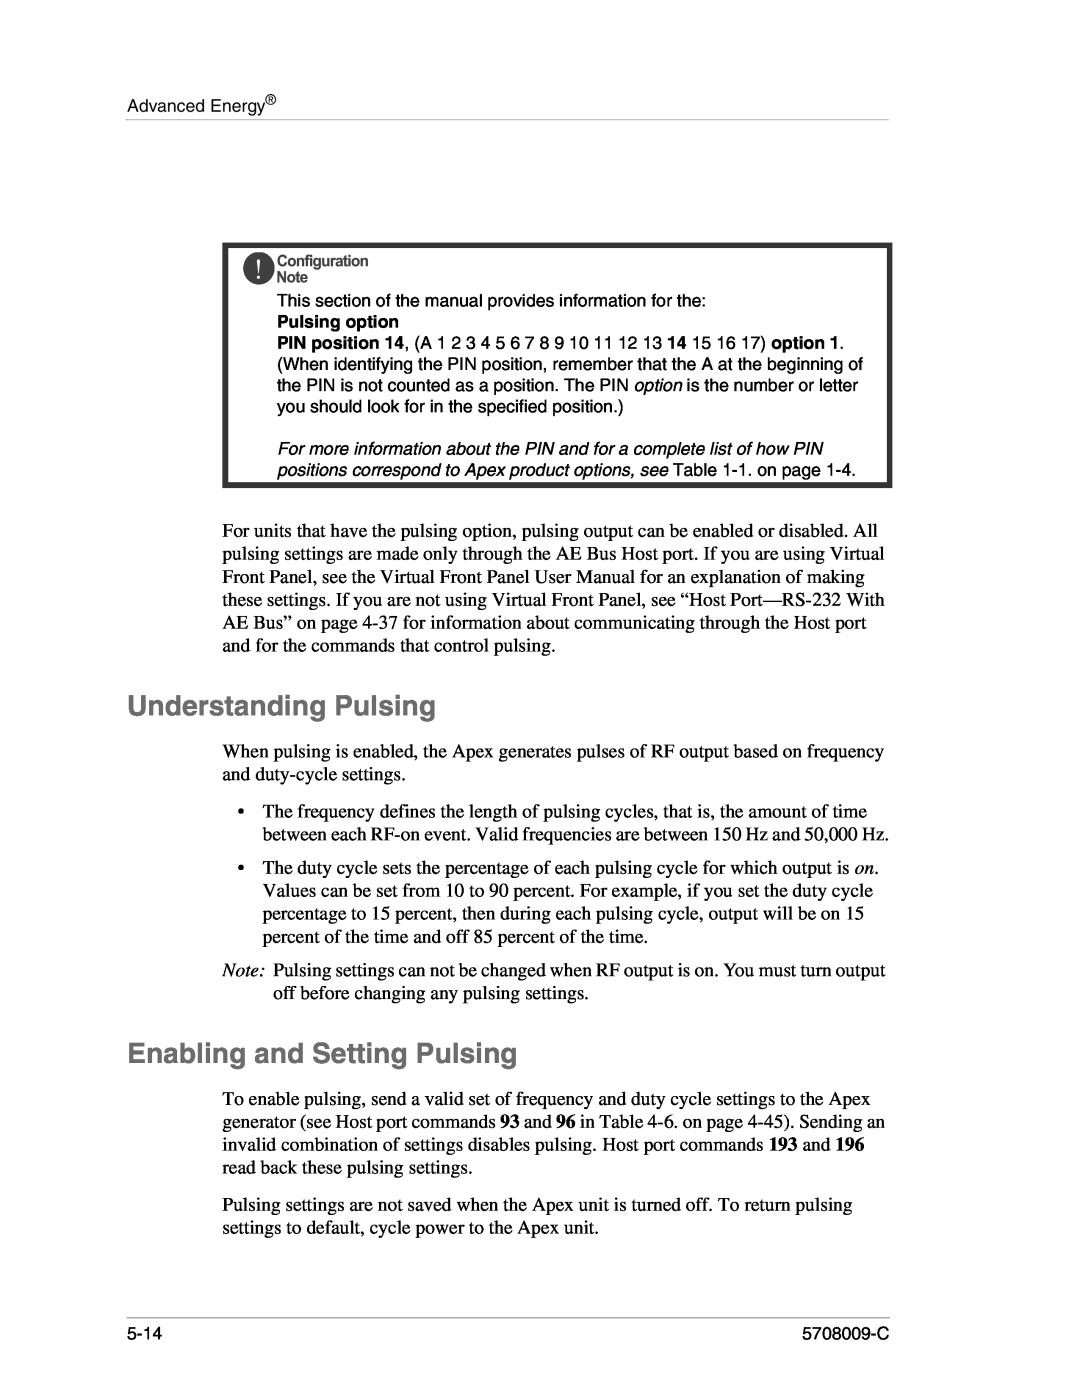 Apex Digital 5708009-C manual Understanding Pulsing, Enabling and Setting Pulsing, Pulsing option 